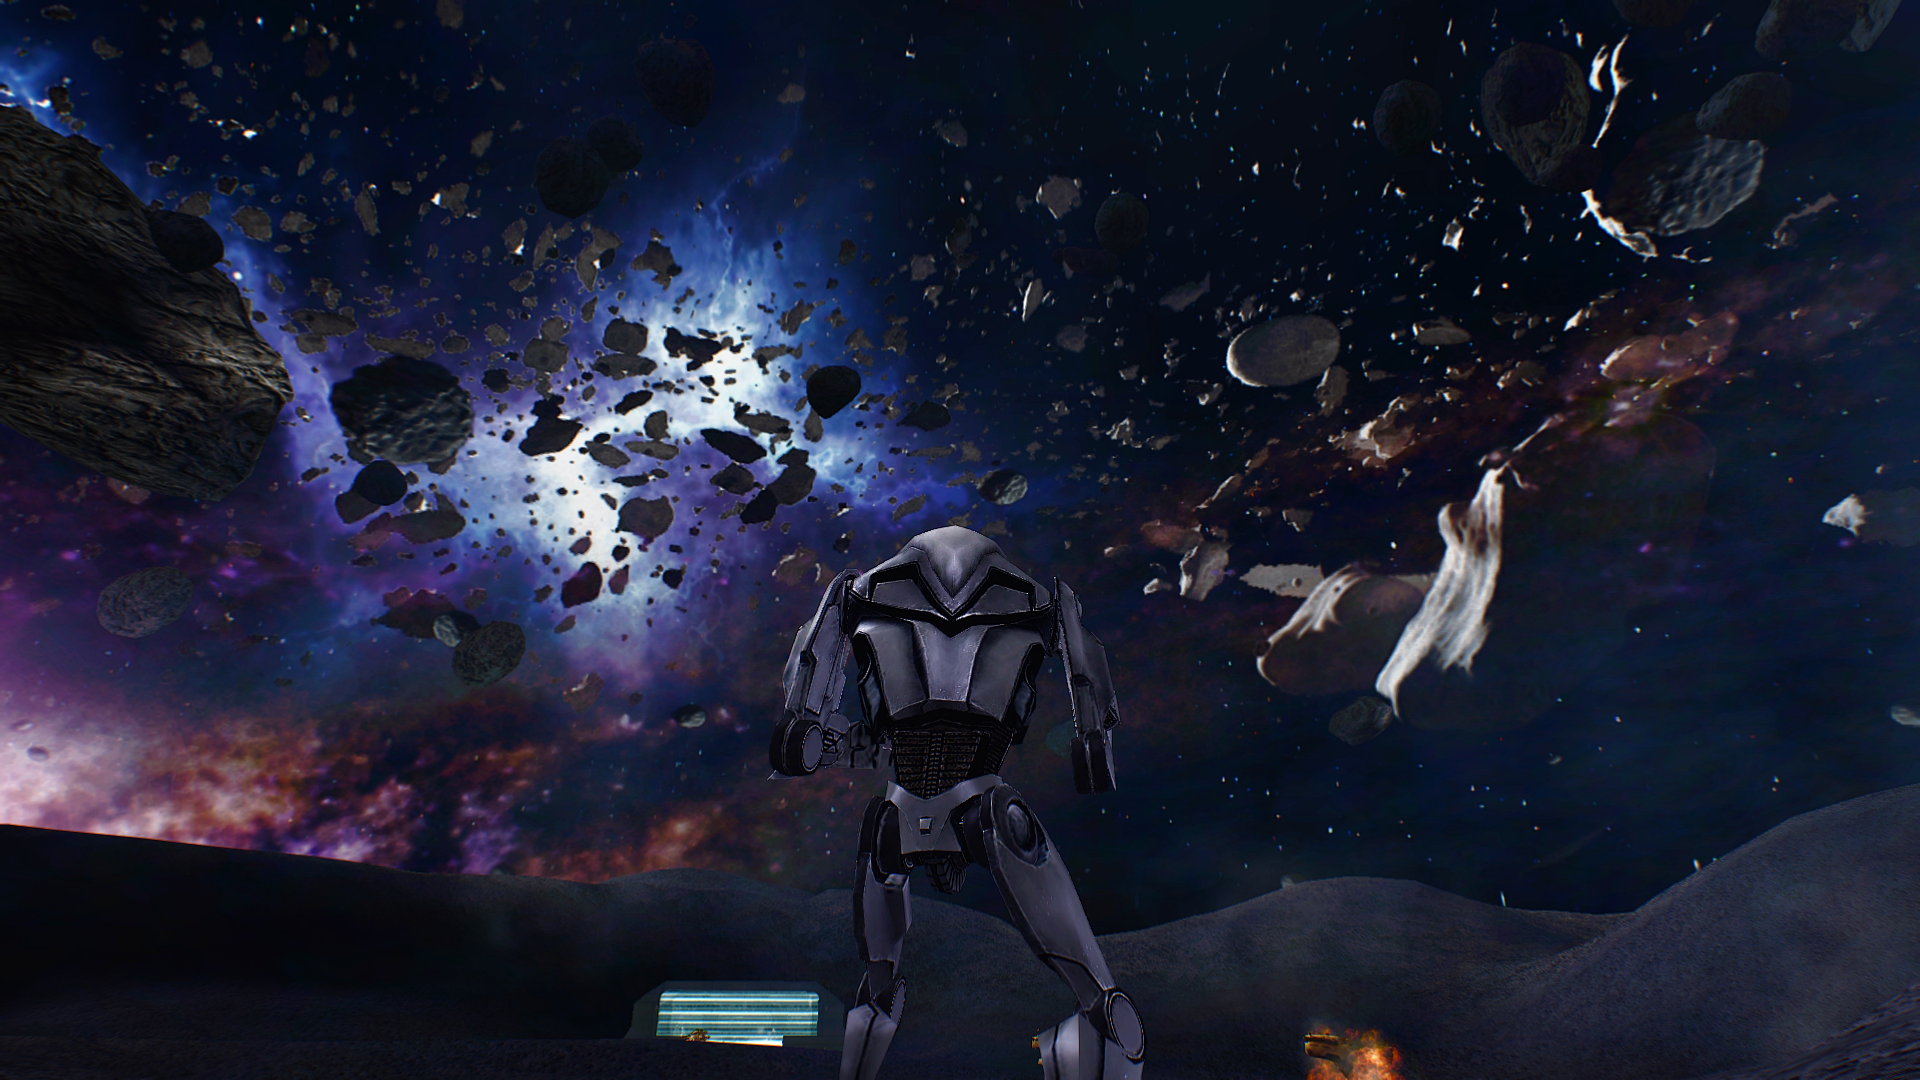 how to get star wars battlefront 2 graphics mod